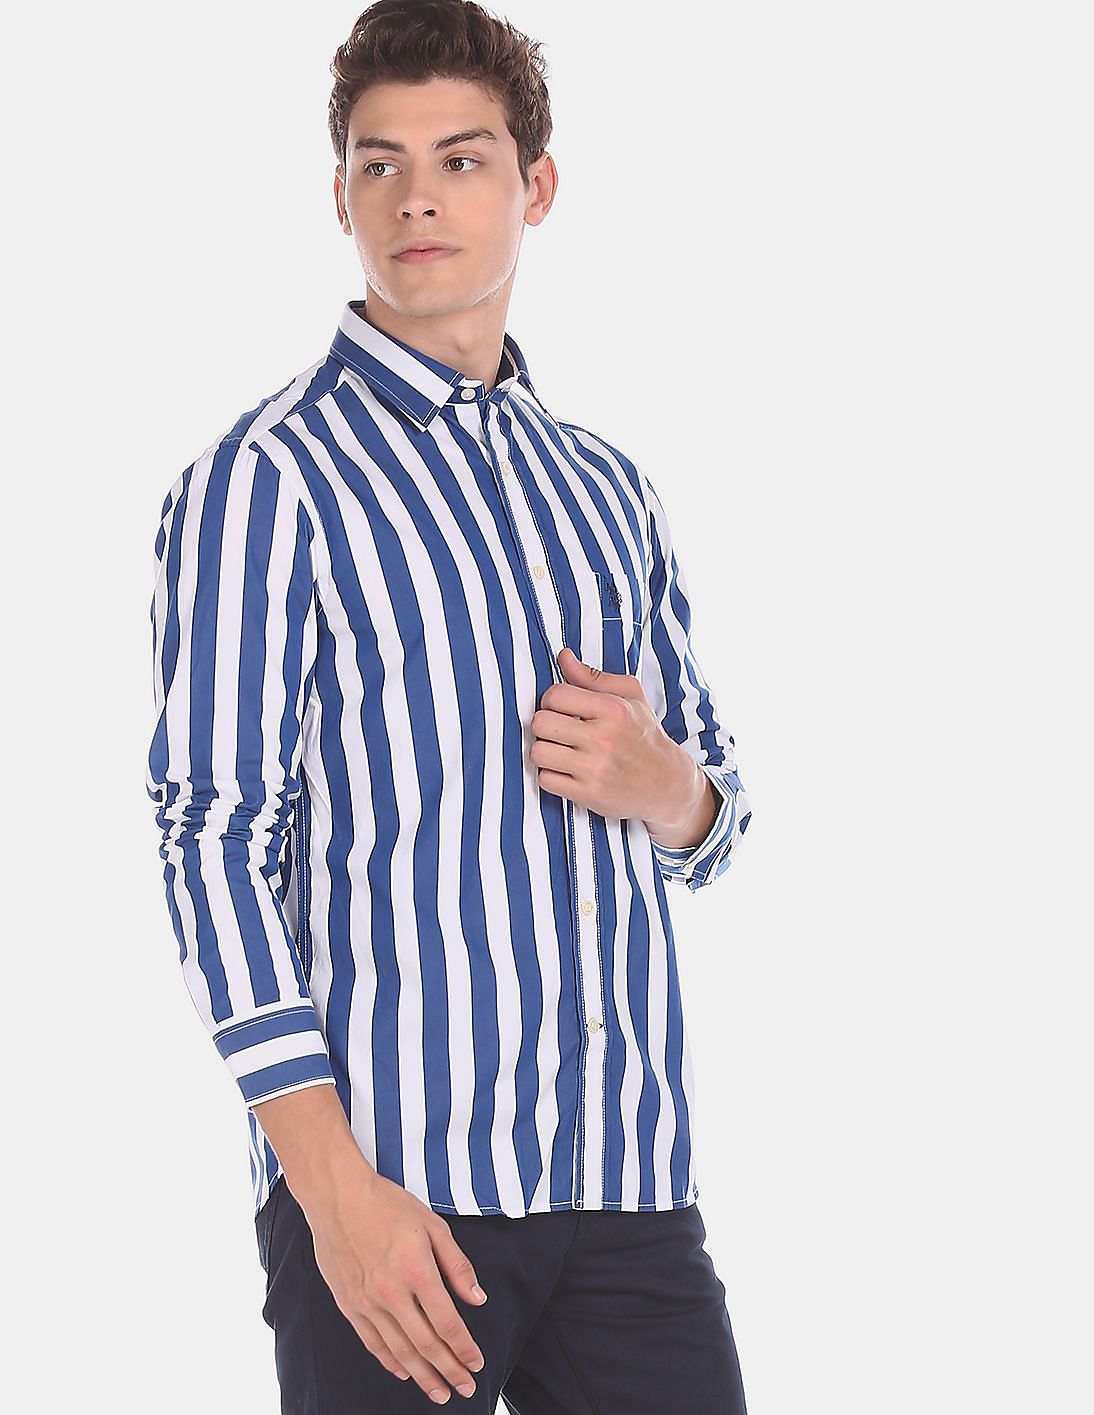 Buy U.S. Polo Assn. Cotton Striped Casual Shirt - NNNOW.com